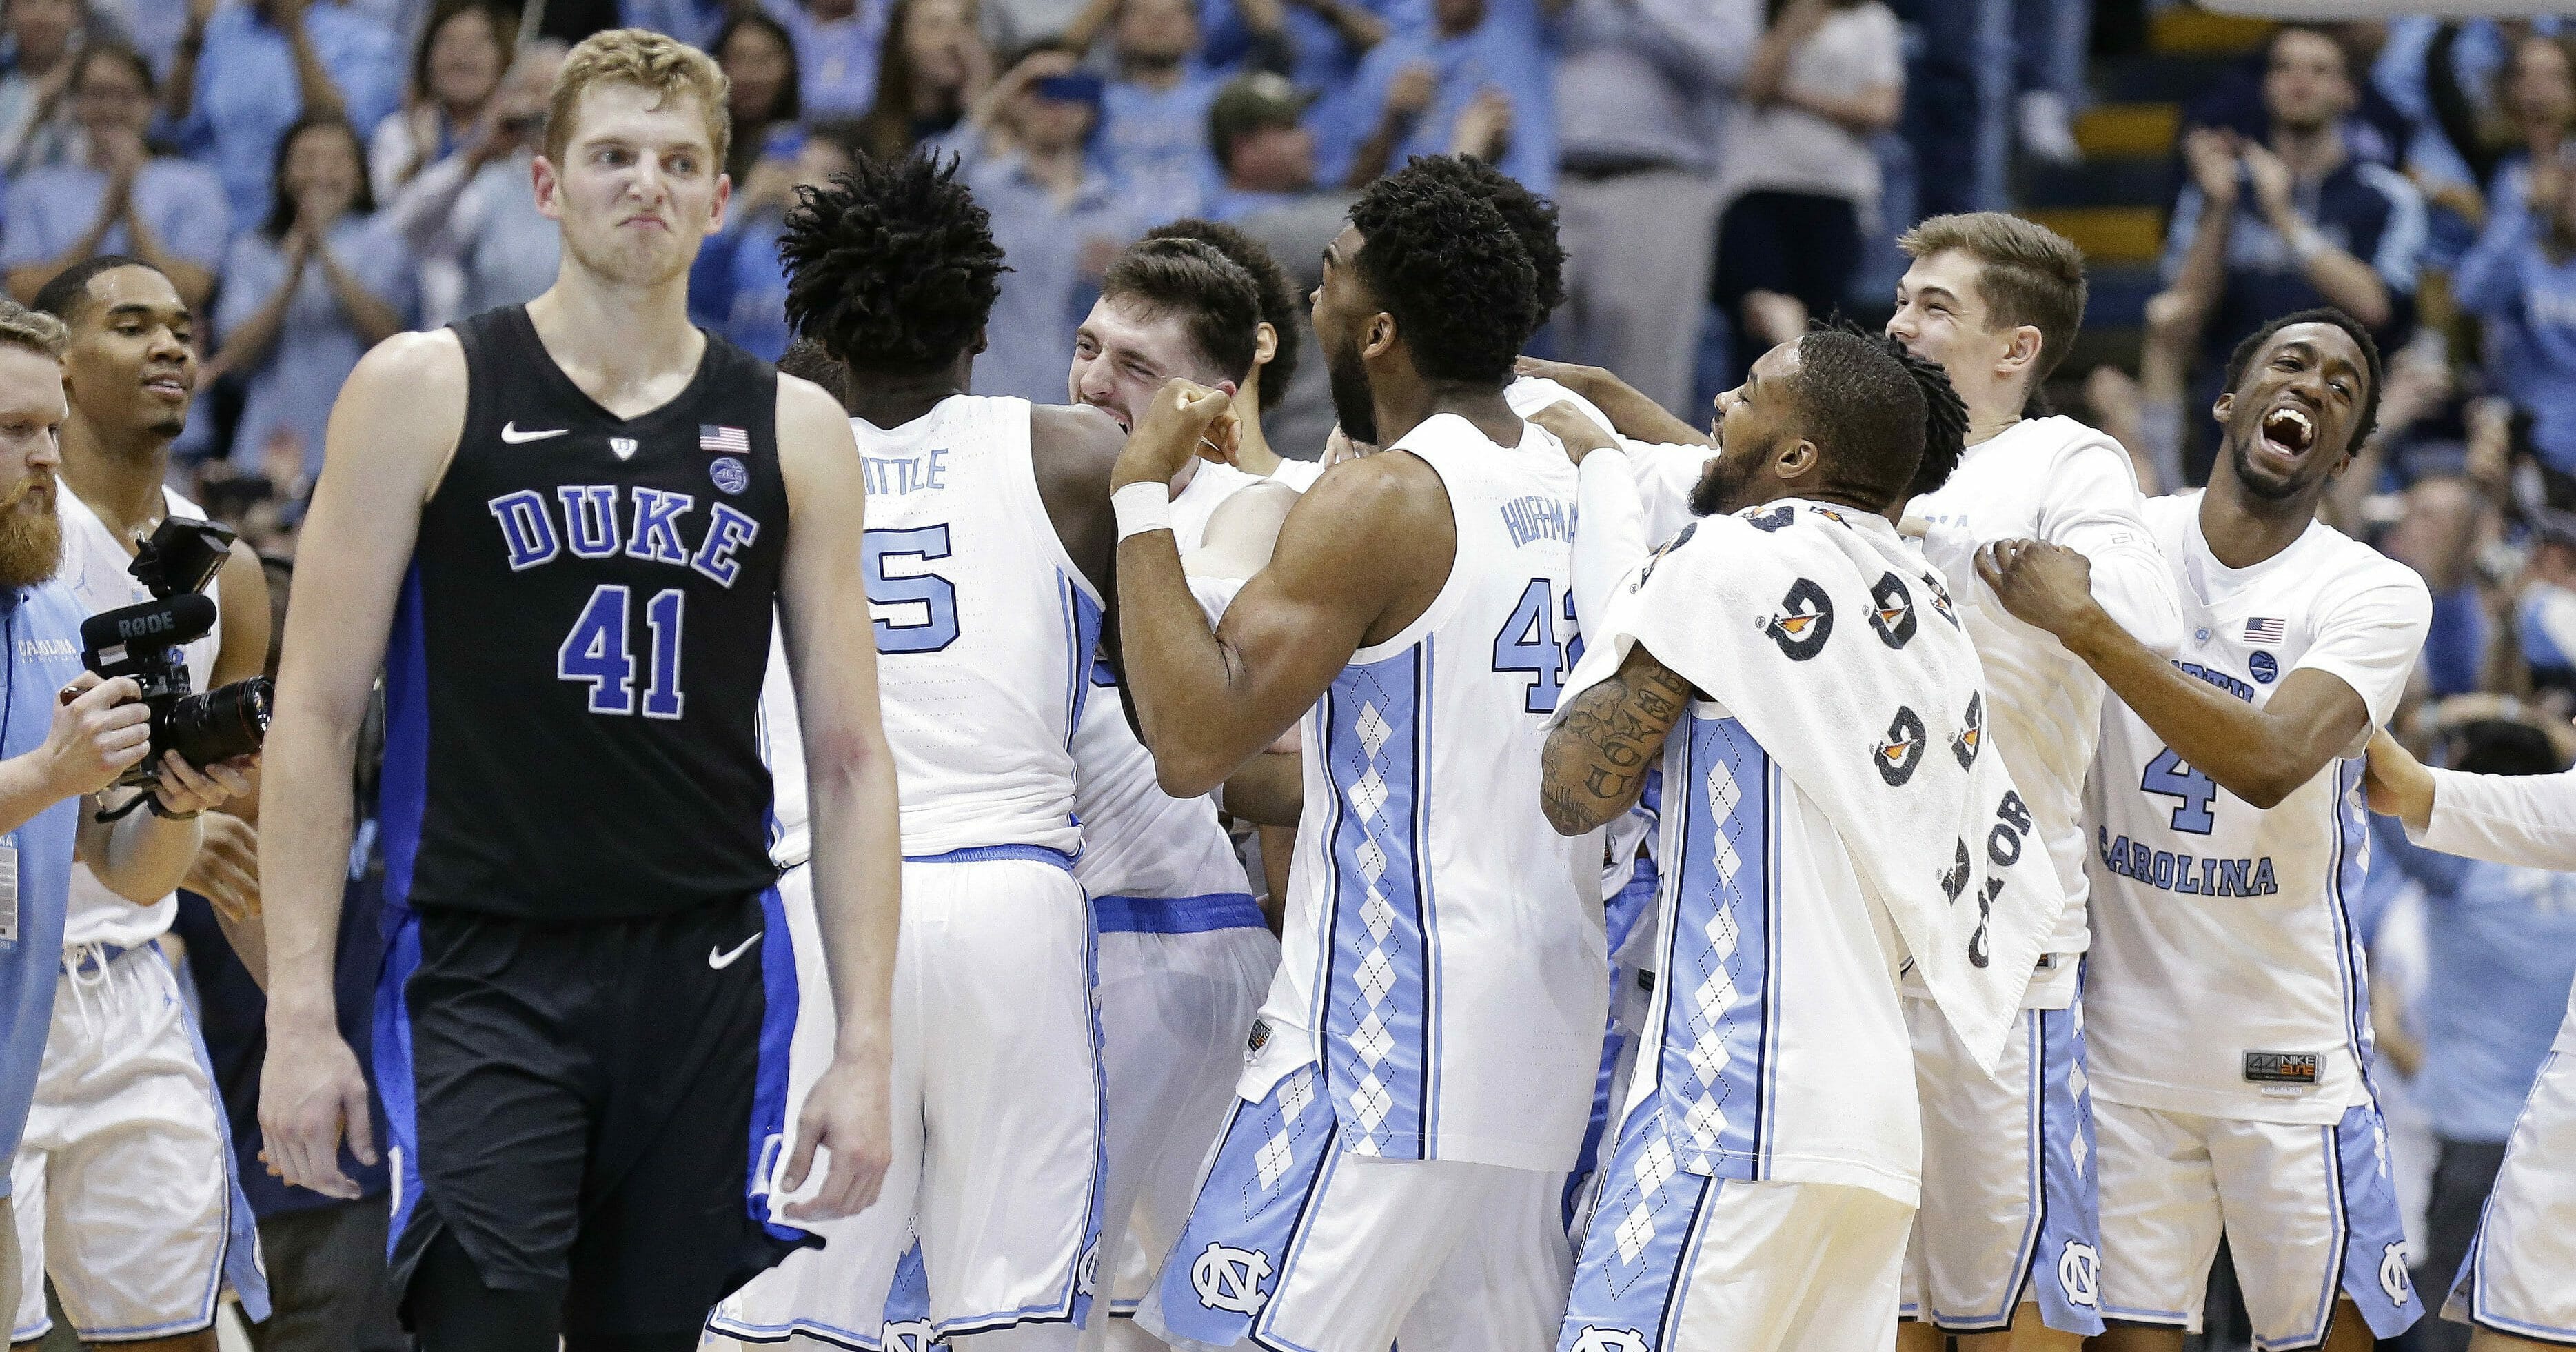 North Carolina players celebrate while Duke's Jack White walks away following an NCAA college basketball game in Chapel Hill, N.C., Saturday, Mar. 9, 2019.